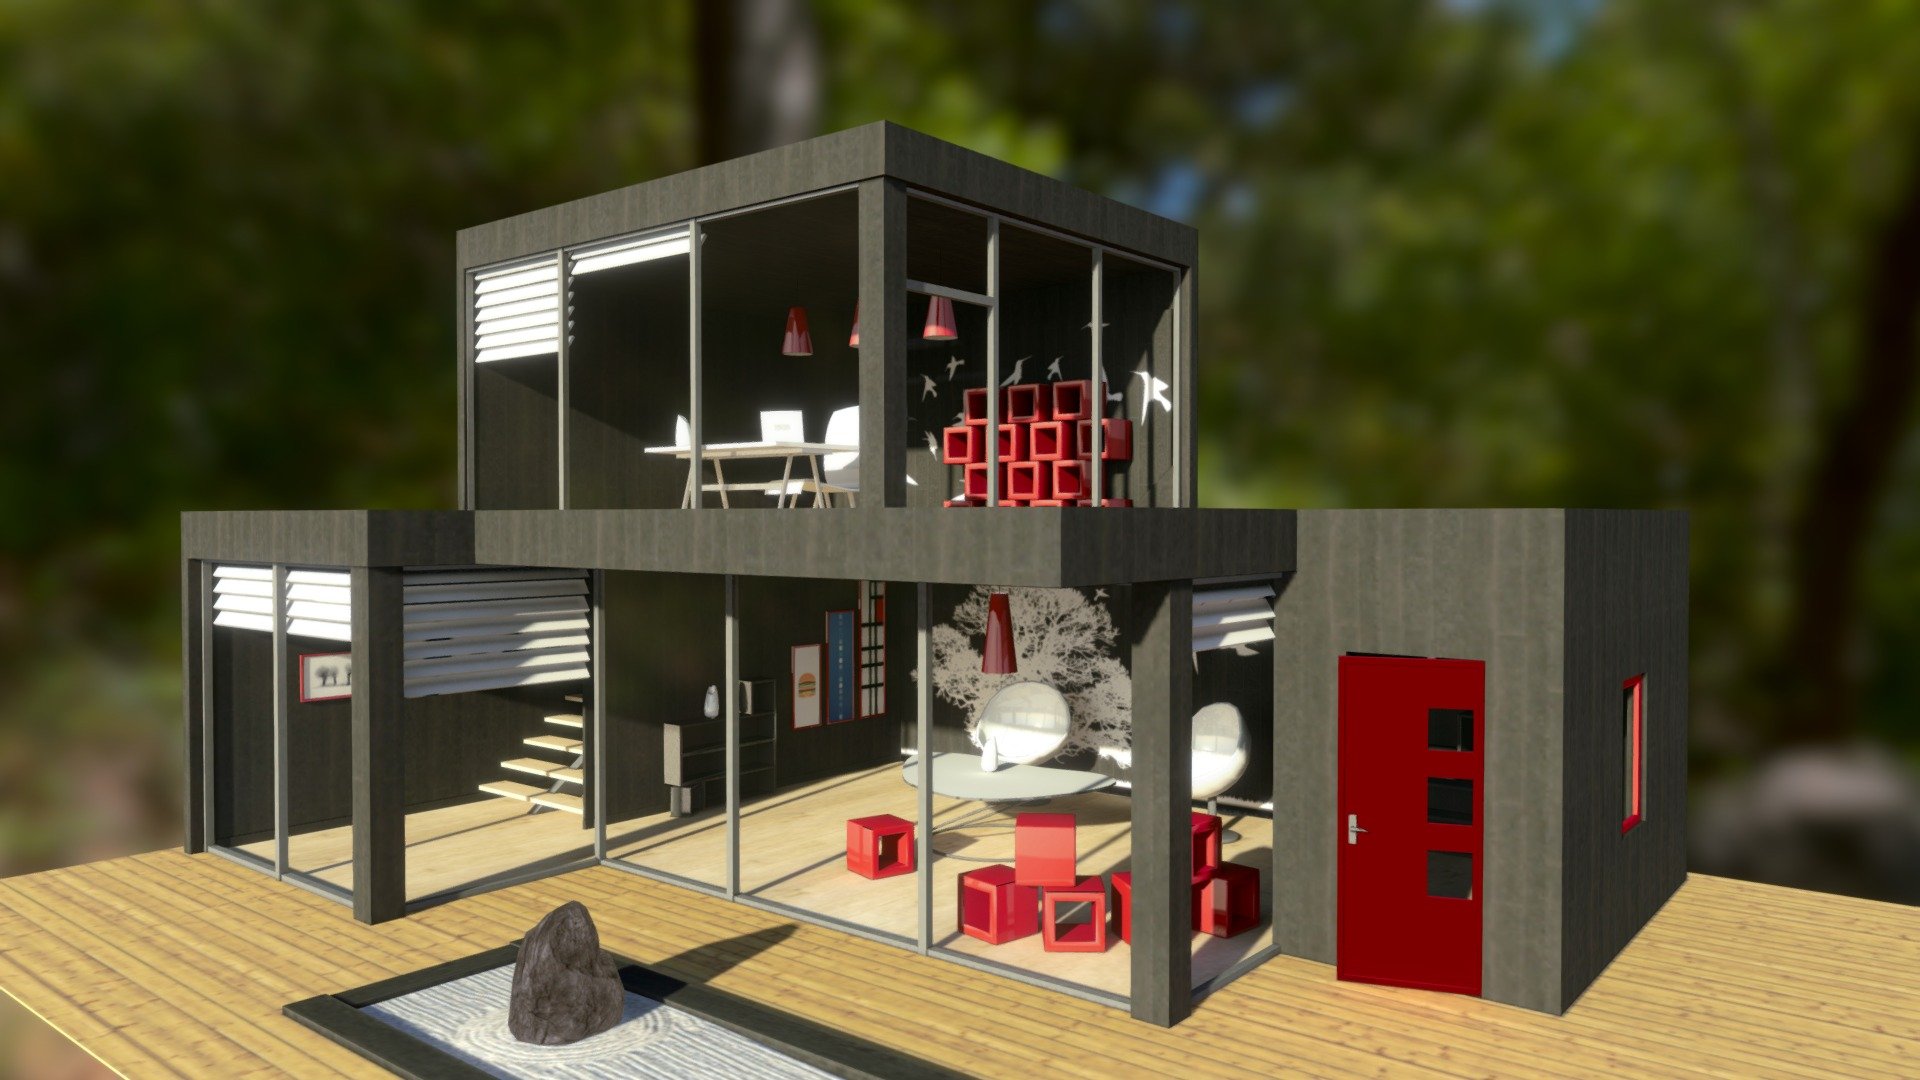 A 3D Mental-Ray baked loft / Zen Office 3d model